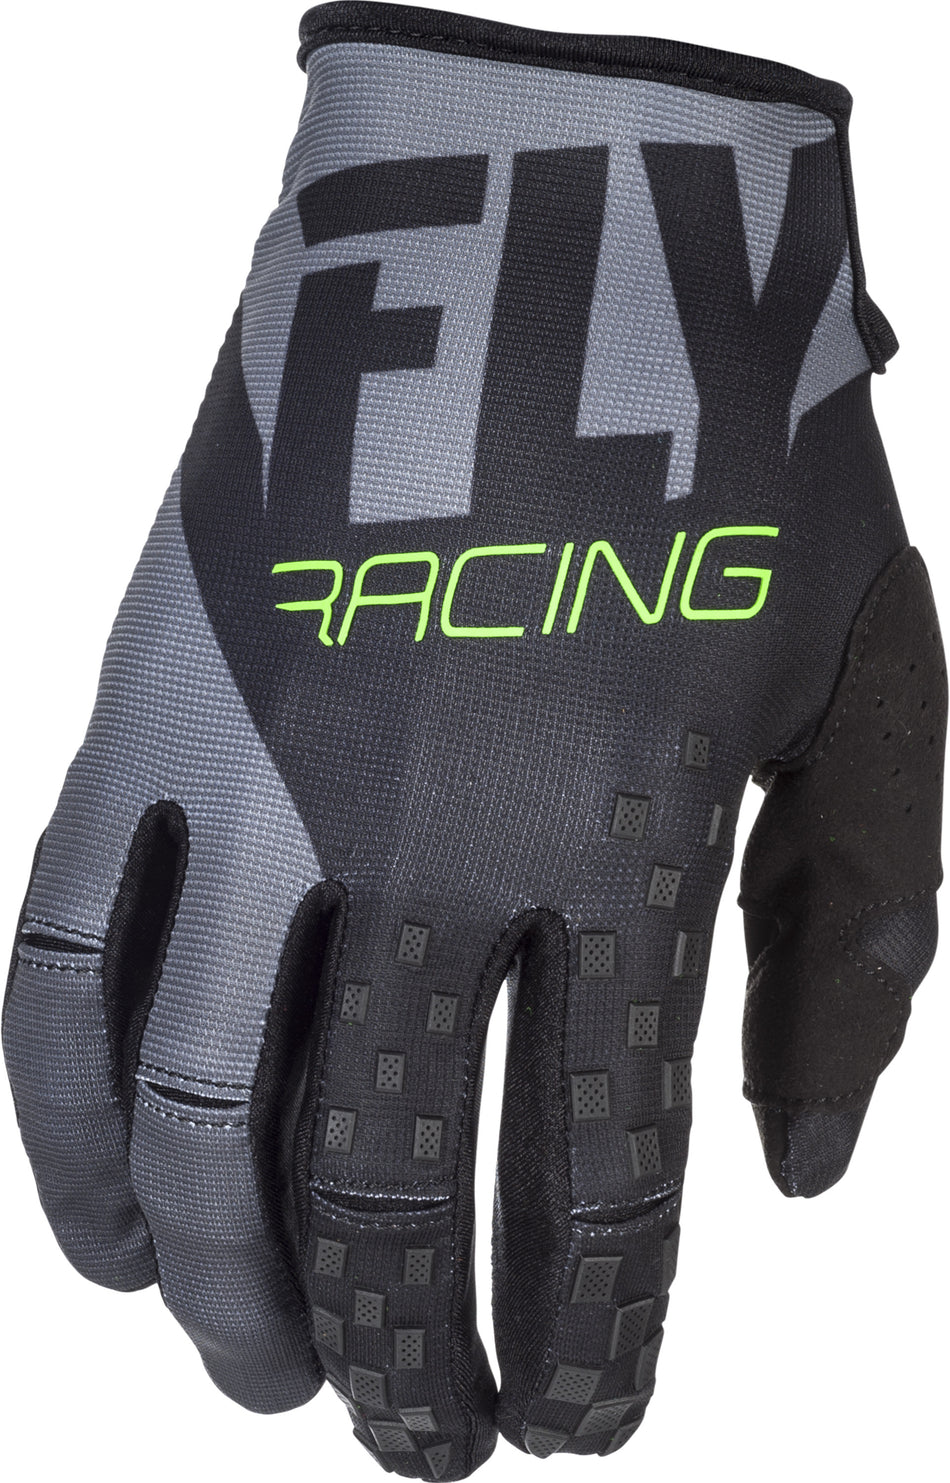 FLY RACING Kinetic Gloves Black/Grey Sz 11 371-41011